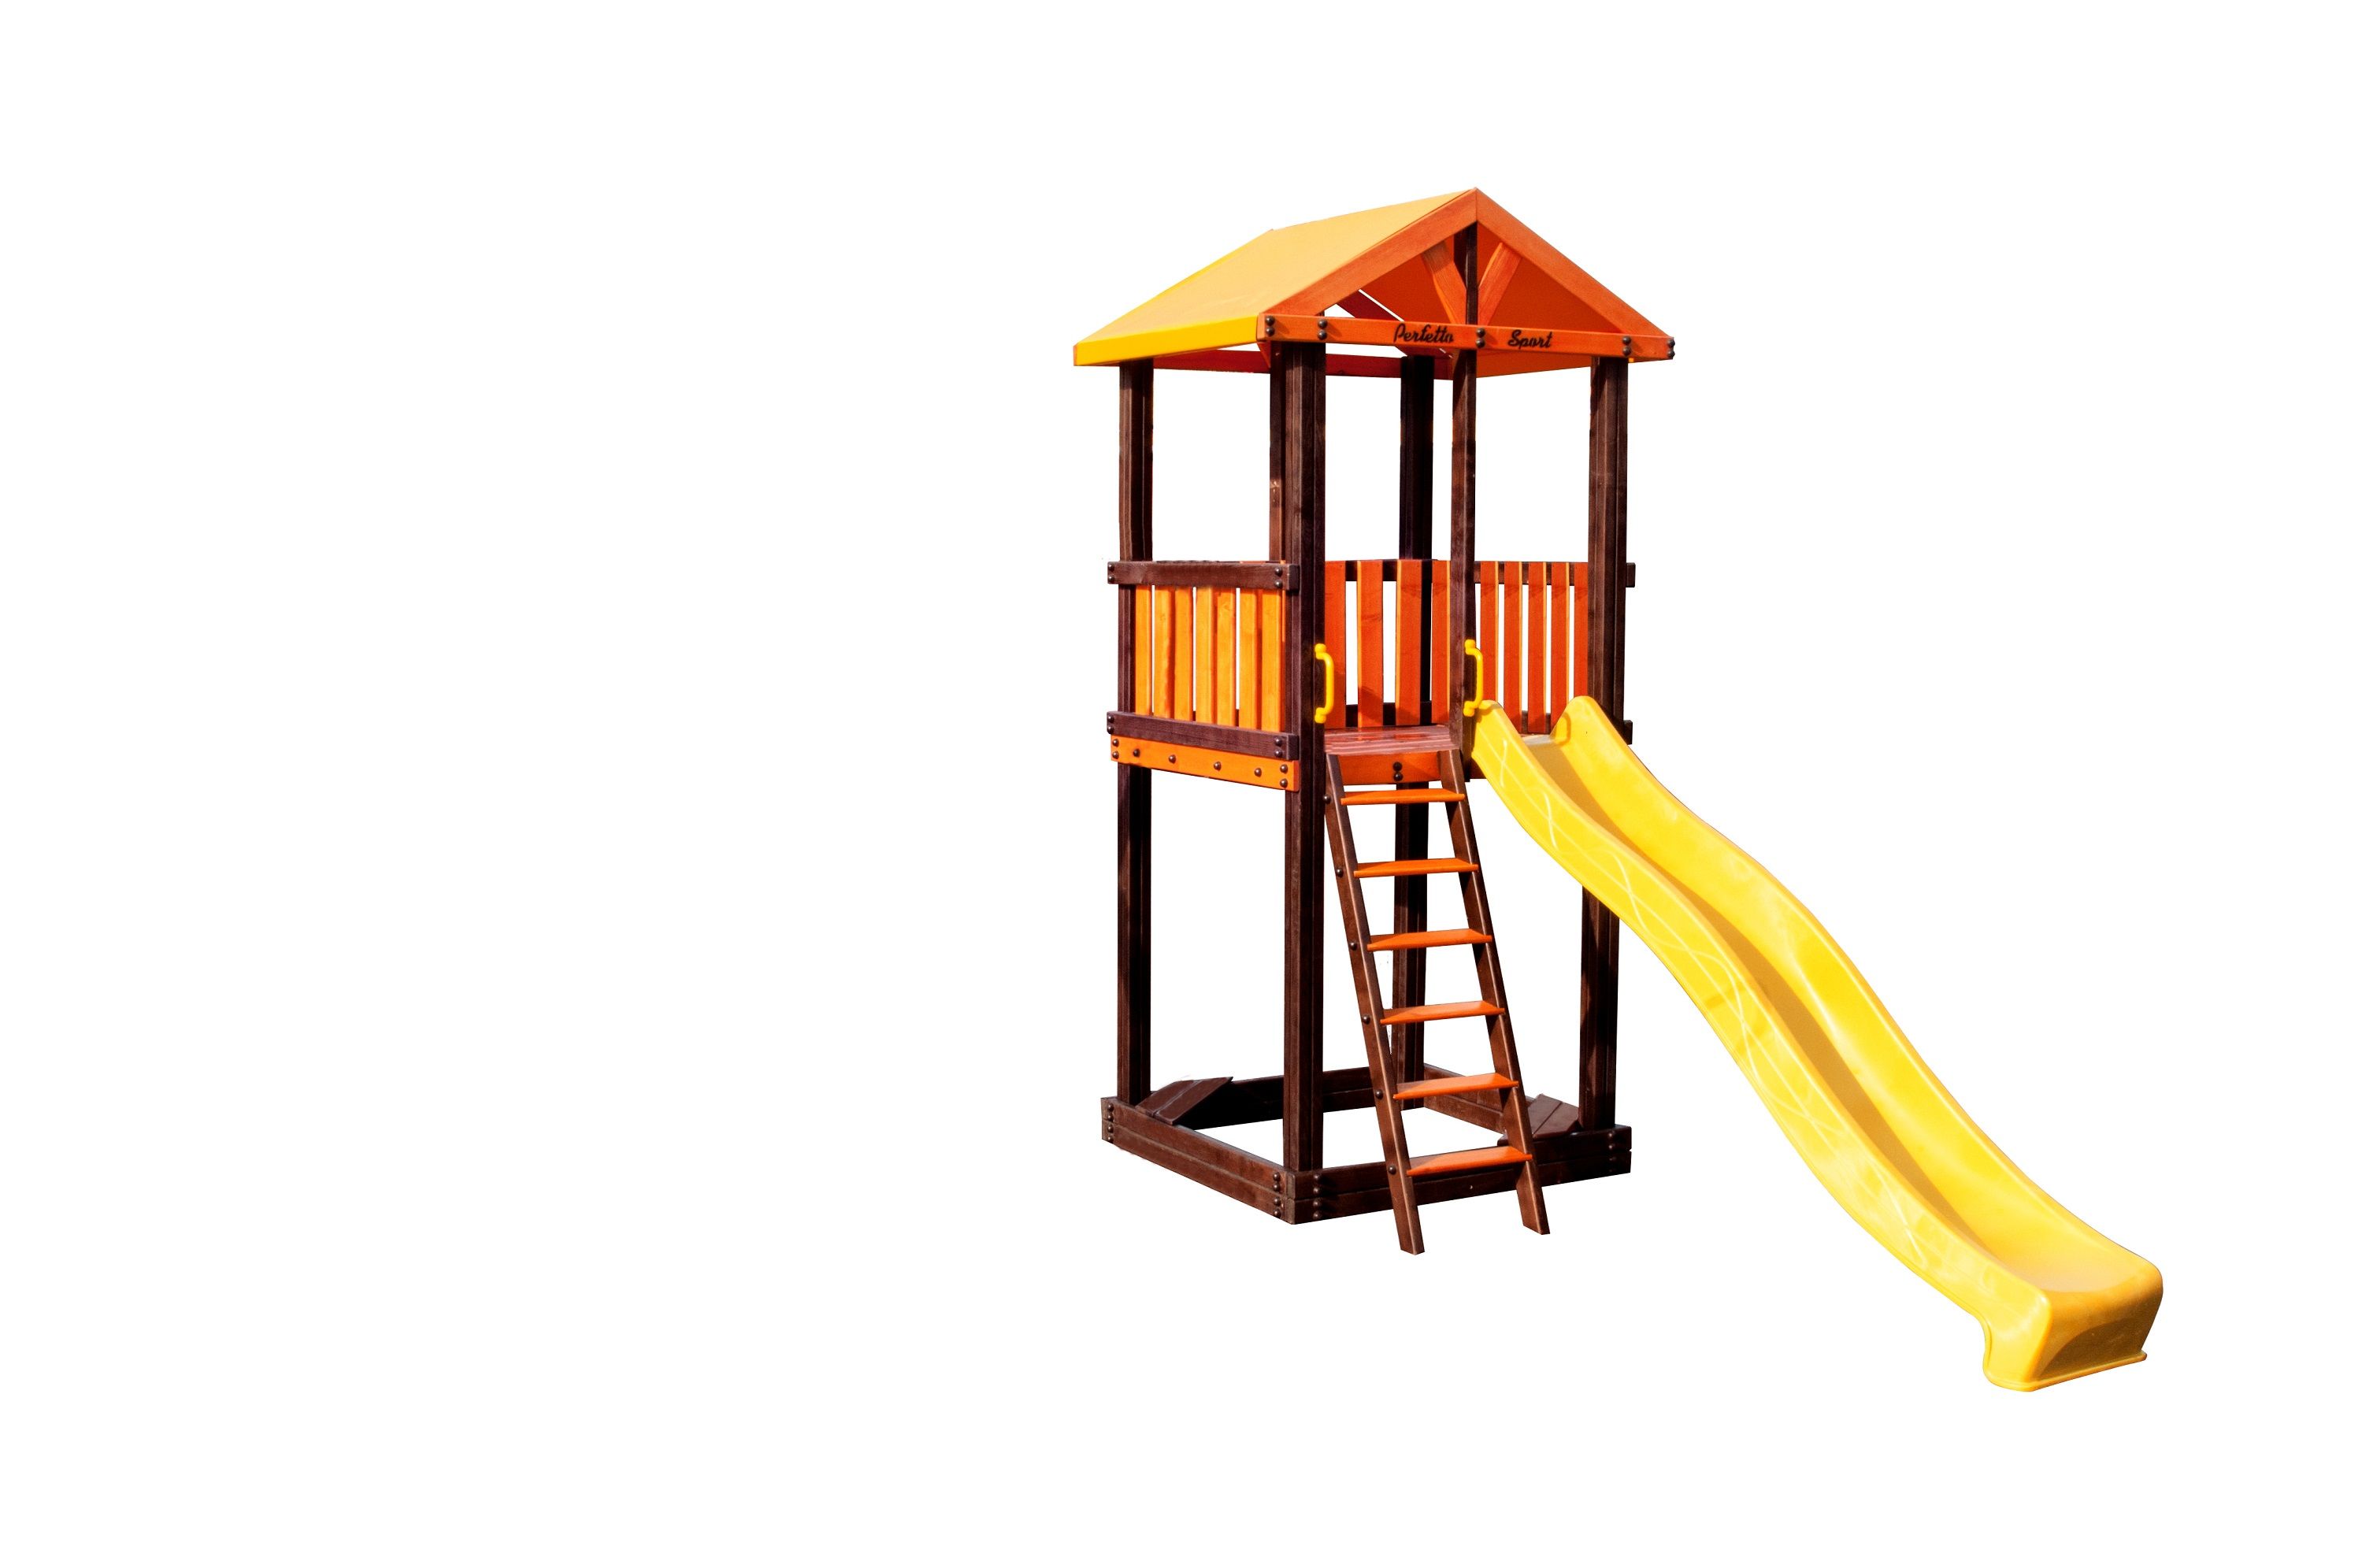 ИК Perfetto sport Pitigliano PS-600 оранжевый/коричневый лестница координационная sportex 4 м b31305 2 оранжевый